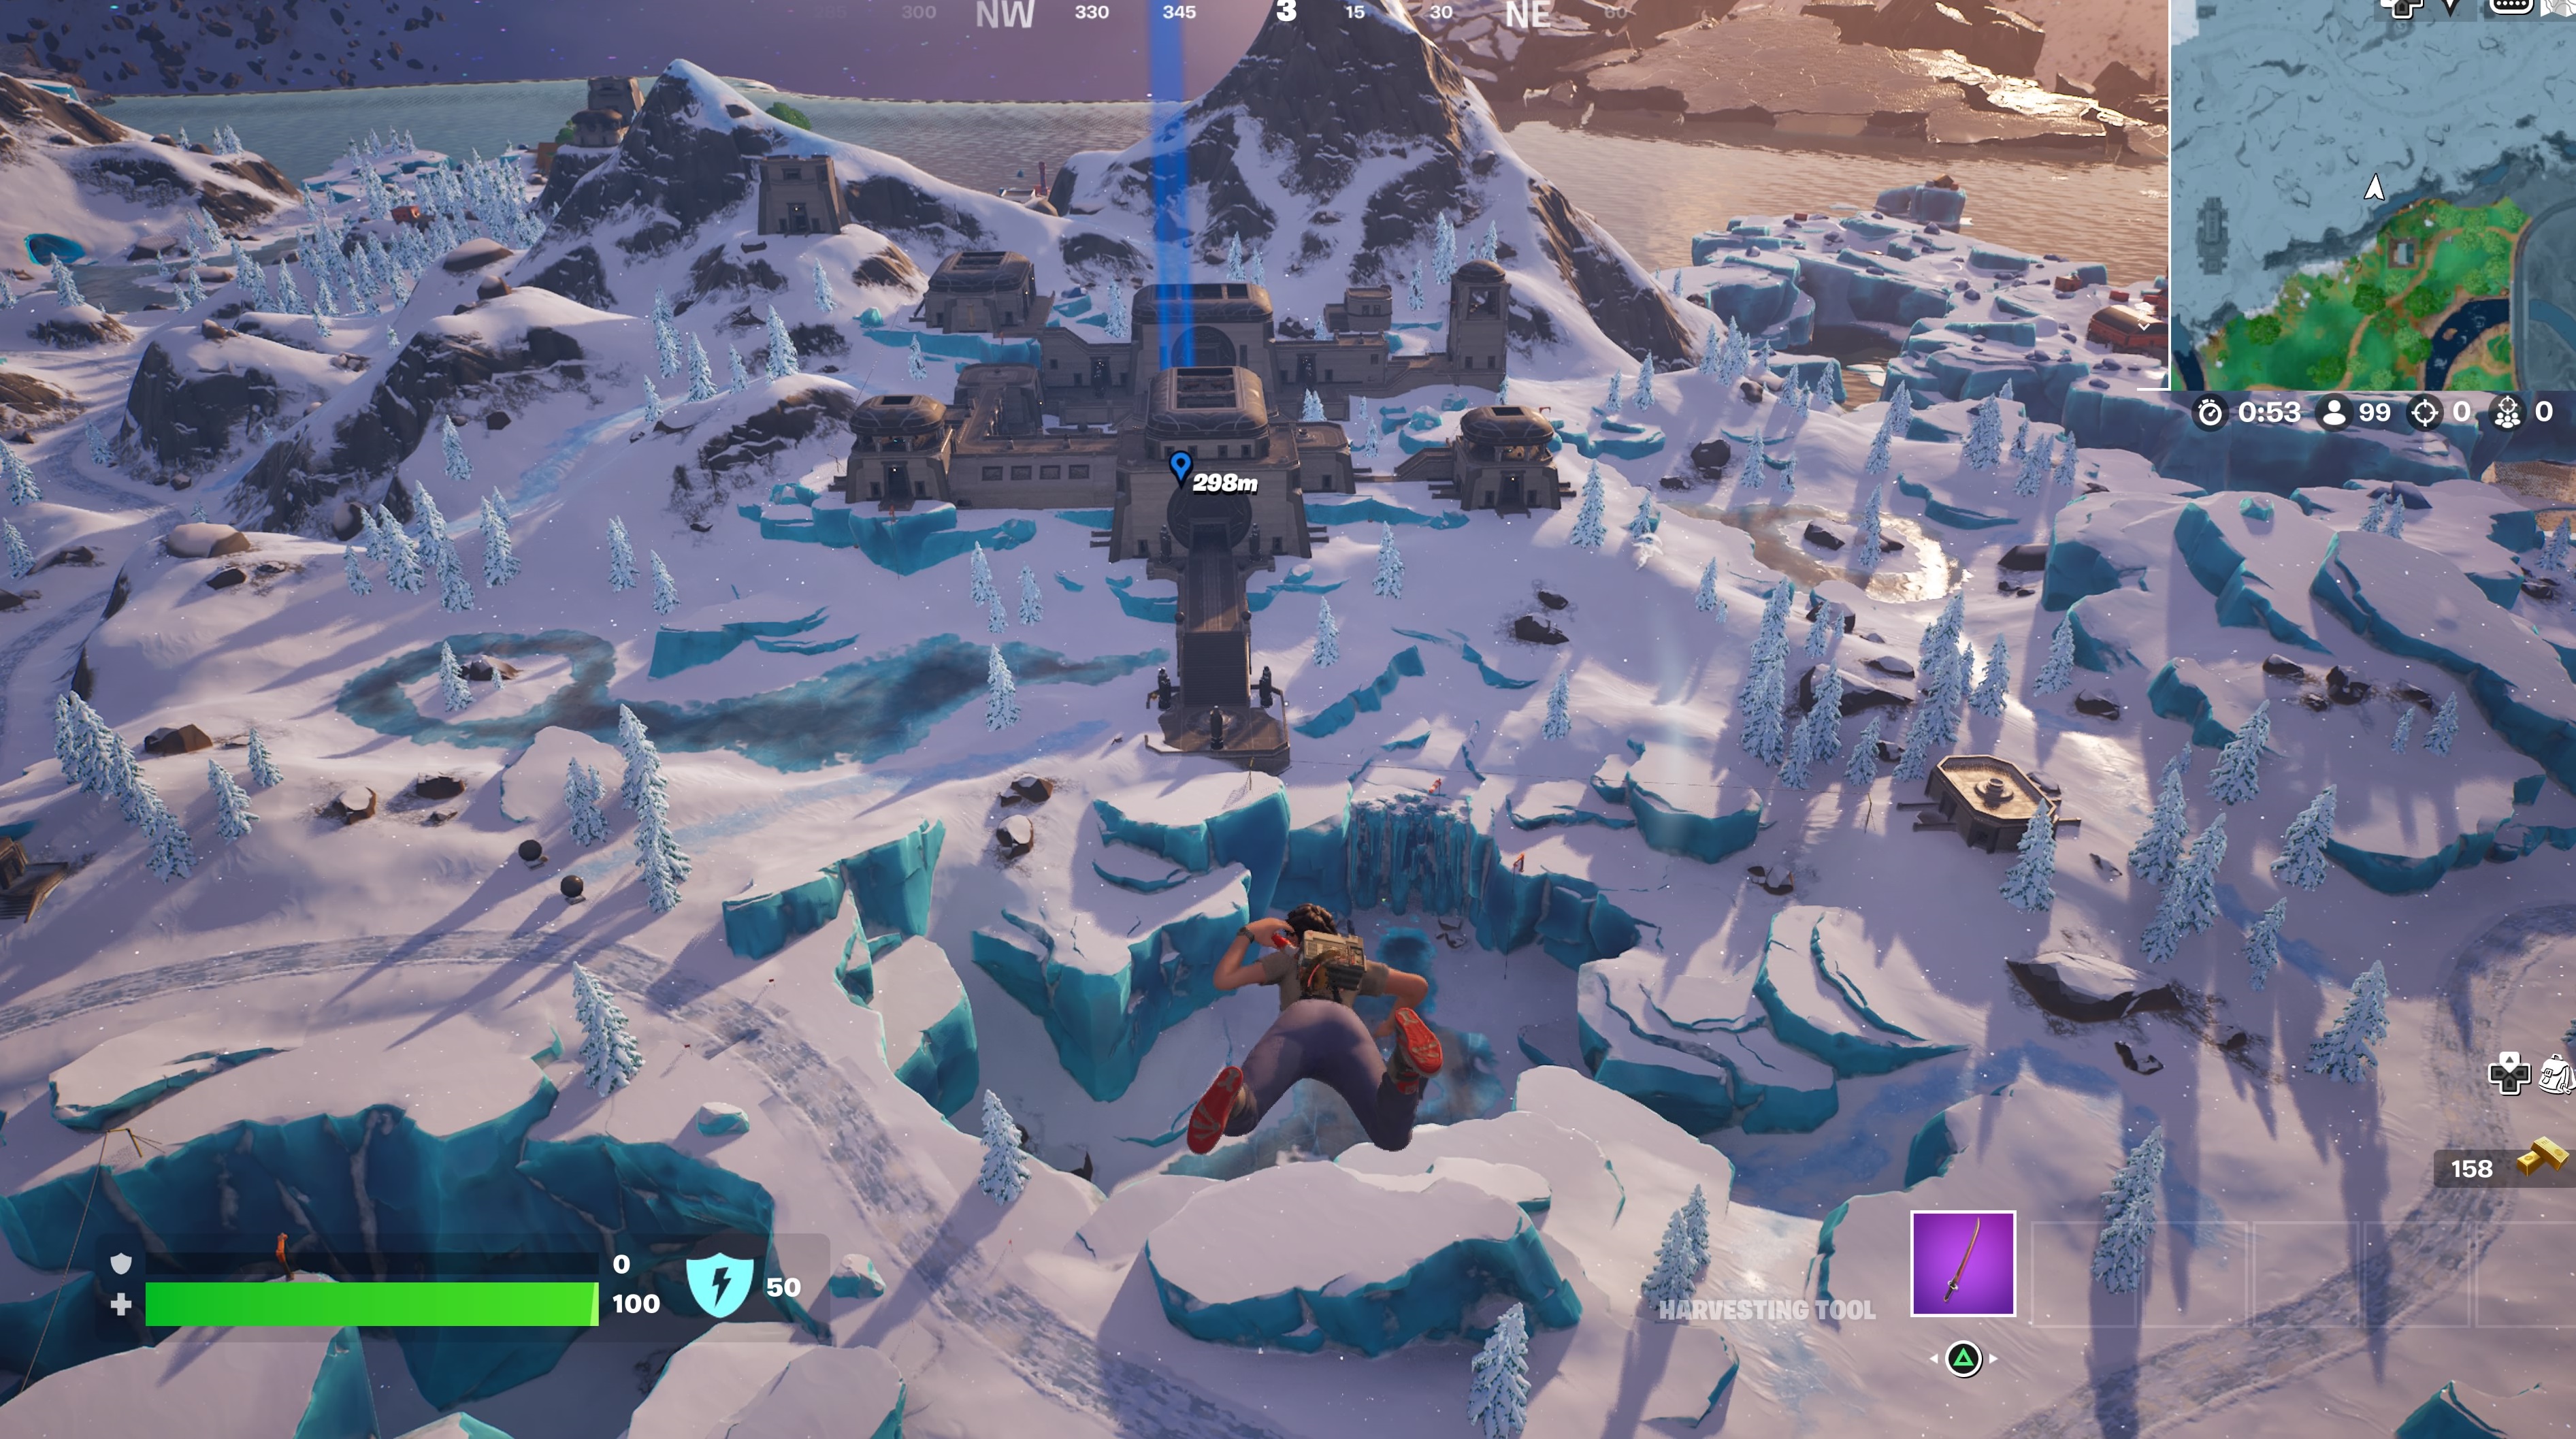 Fortnite - a player skydives towards the snow-covered Brutal Bastion base